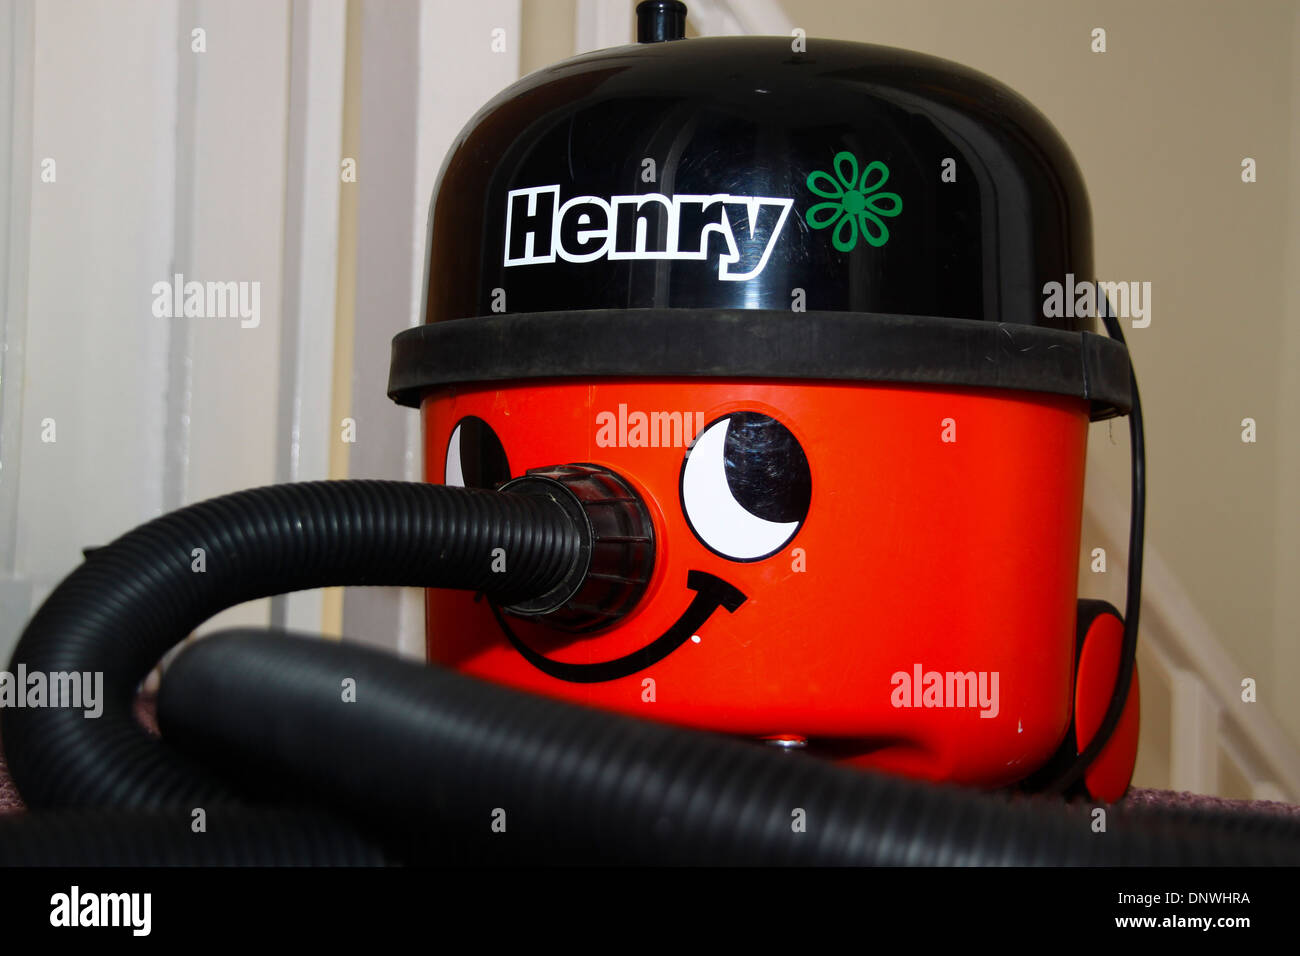 Numatic Henry vacuum cleaner Stock Photo